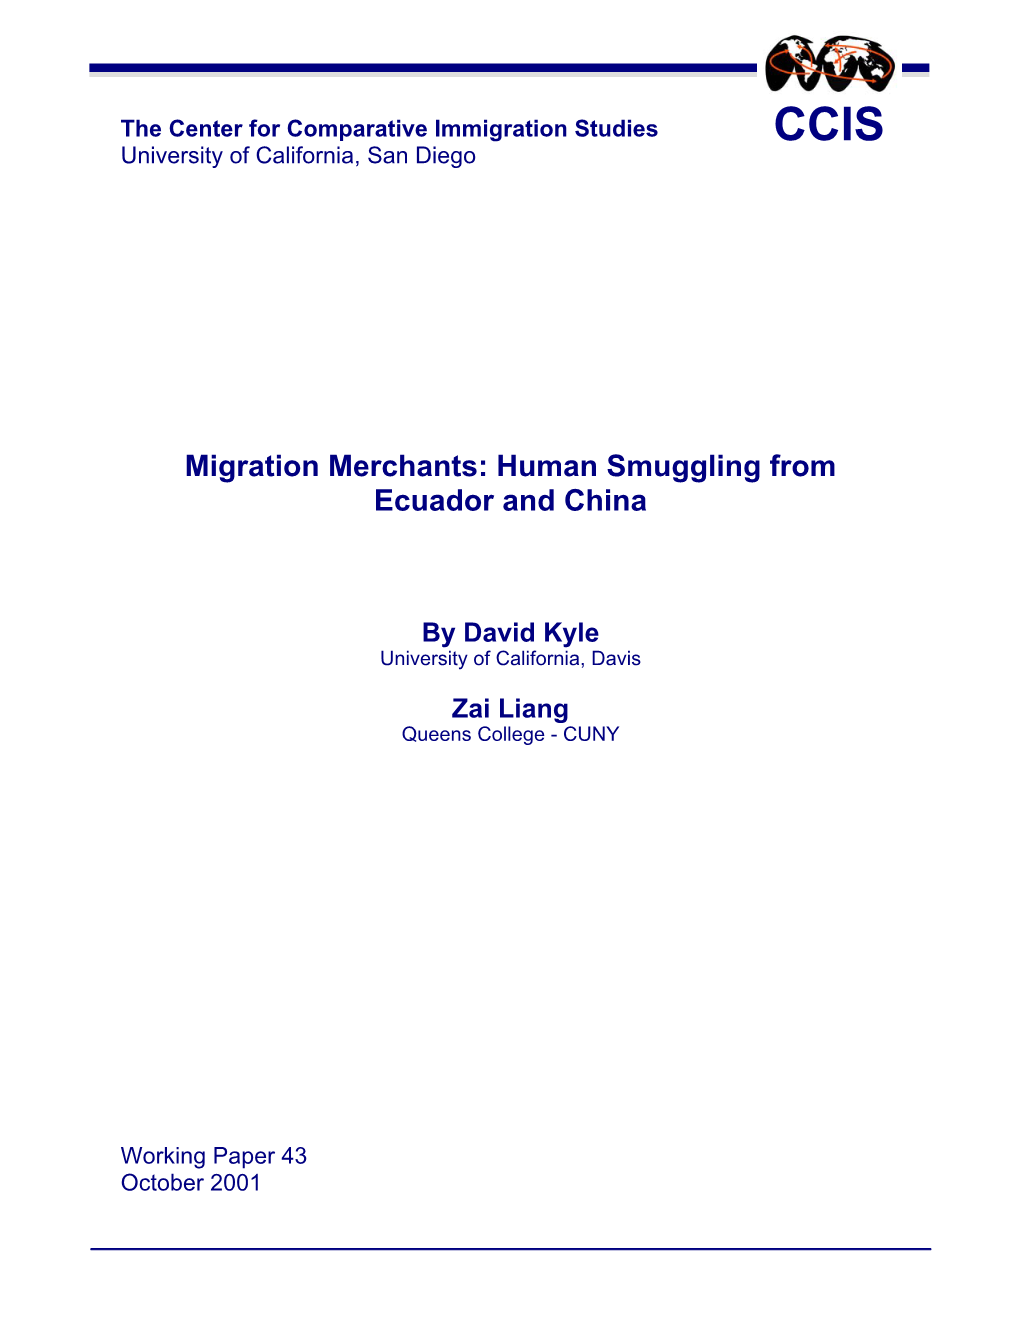 Migration Merchants: Human Smuggling from Ecuador and China